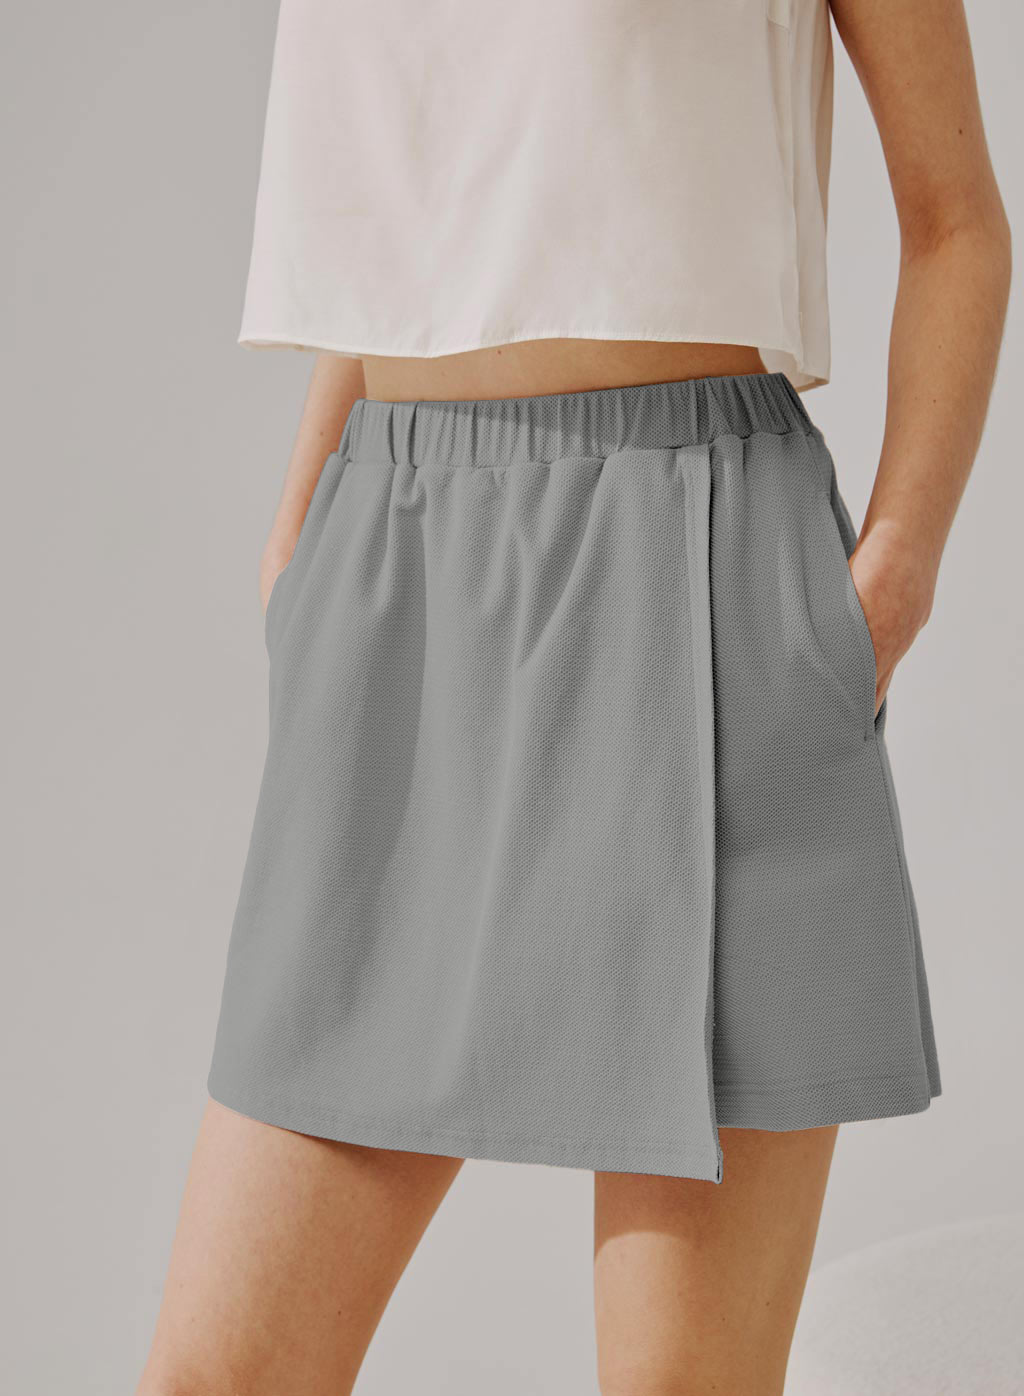 Cotton Elastic Waist Short Skort with Side Pockets